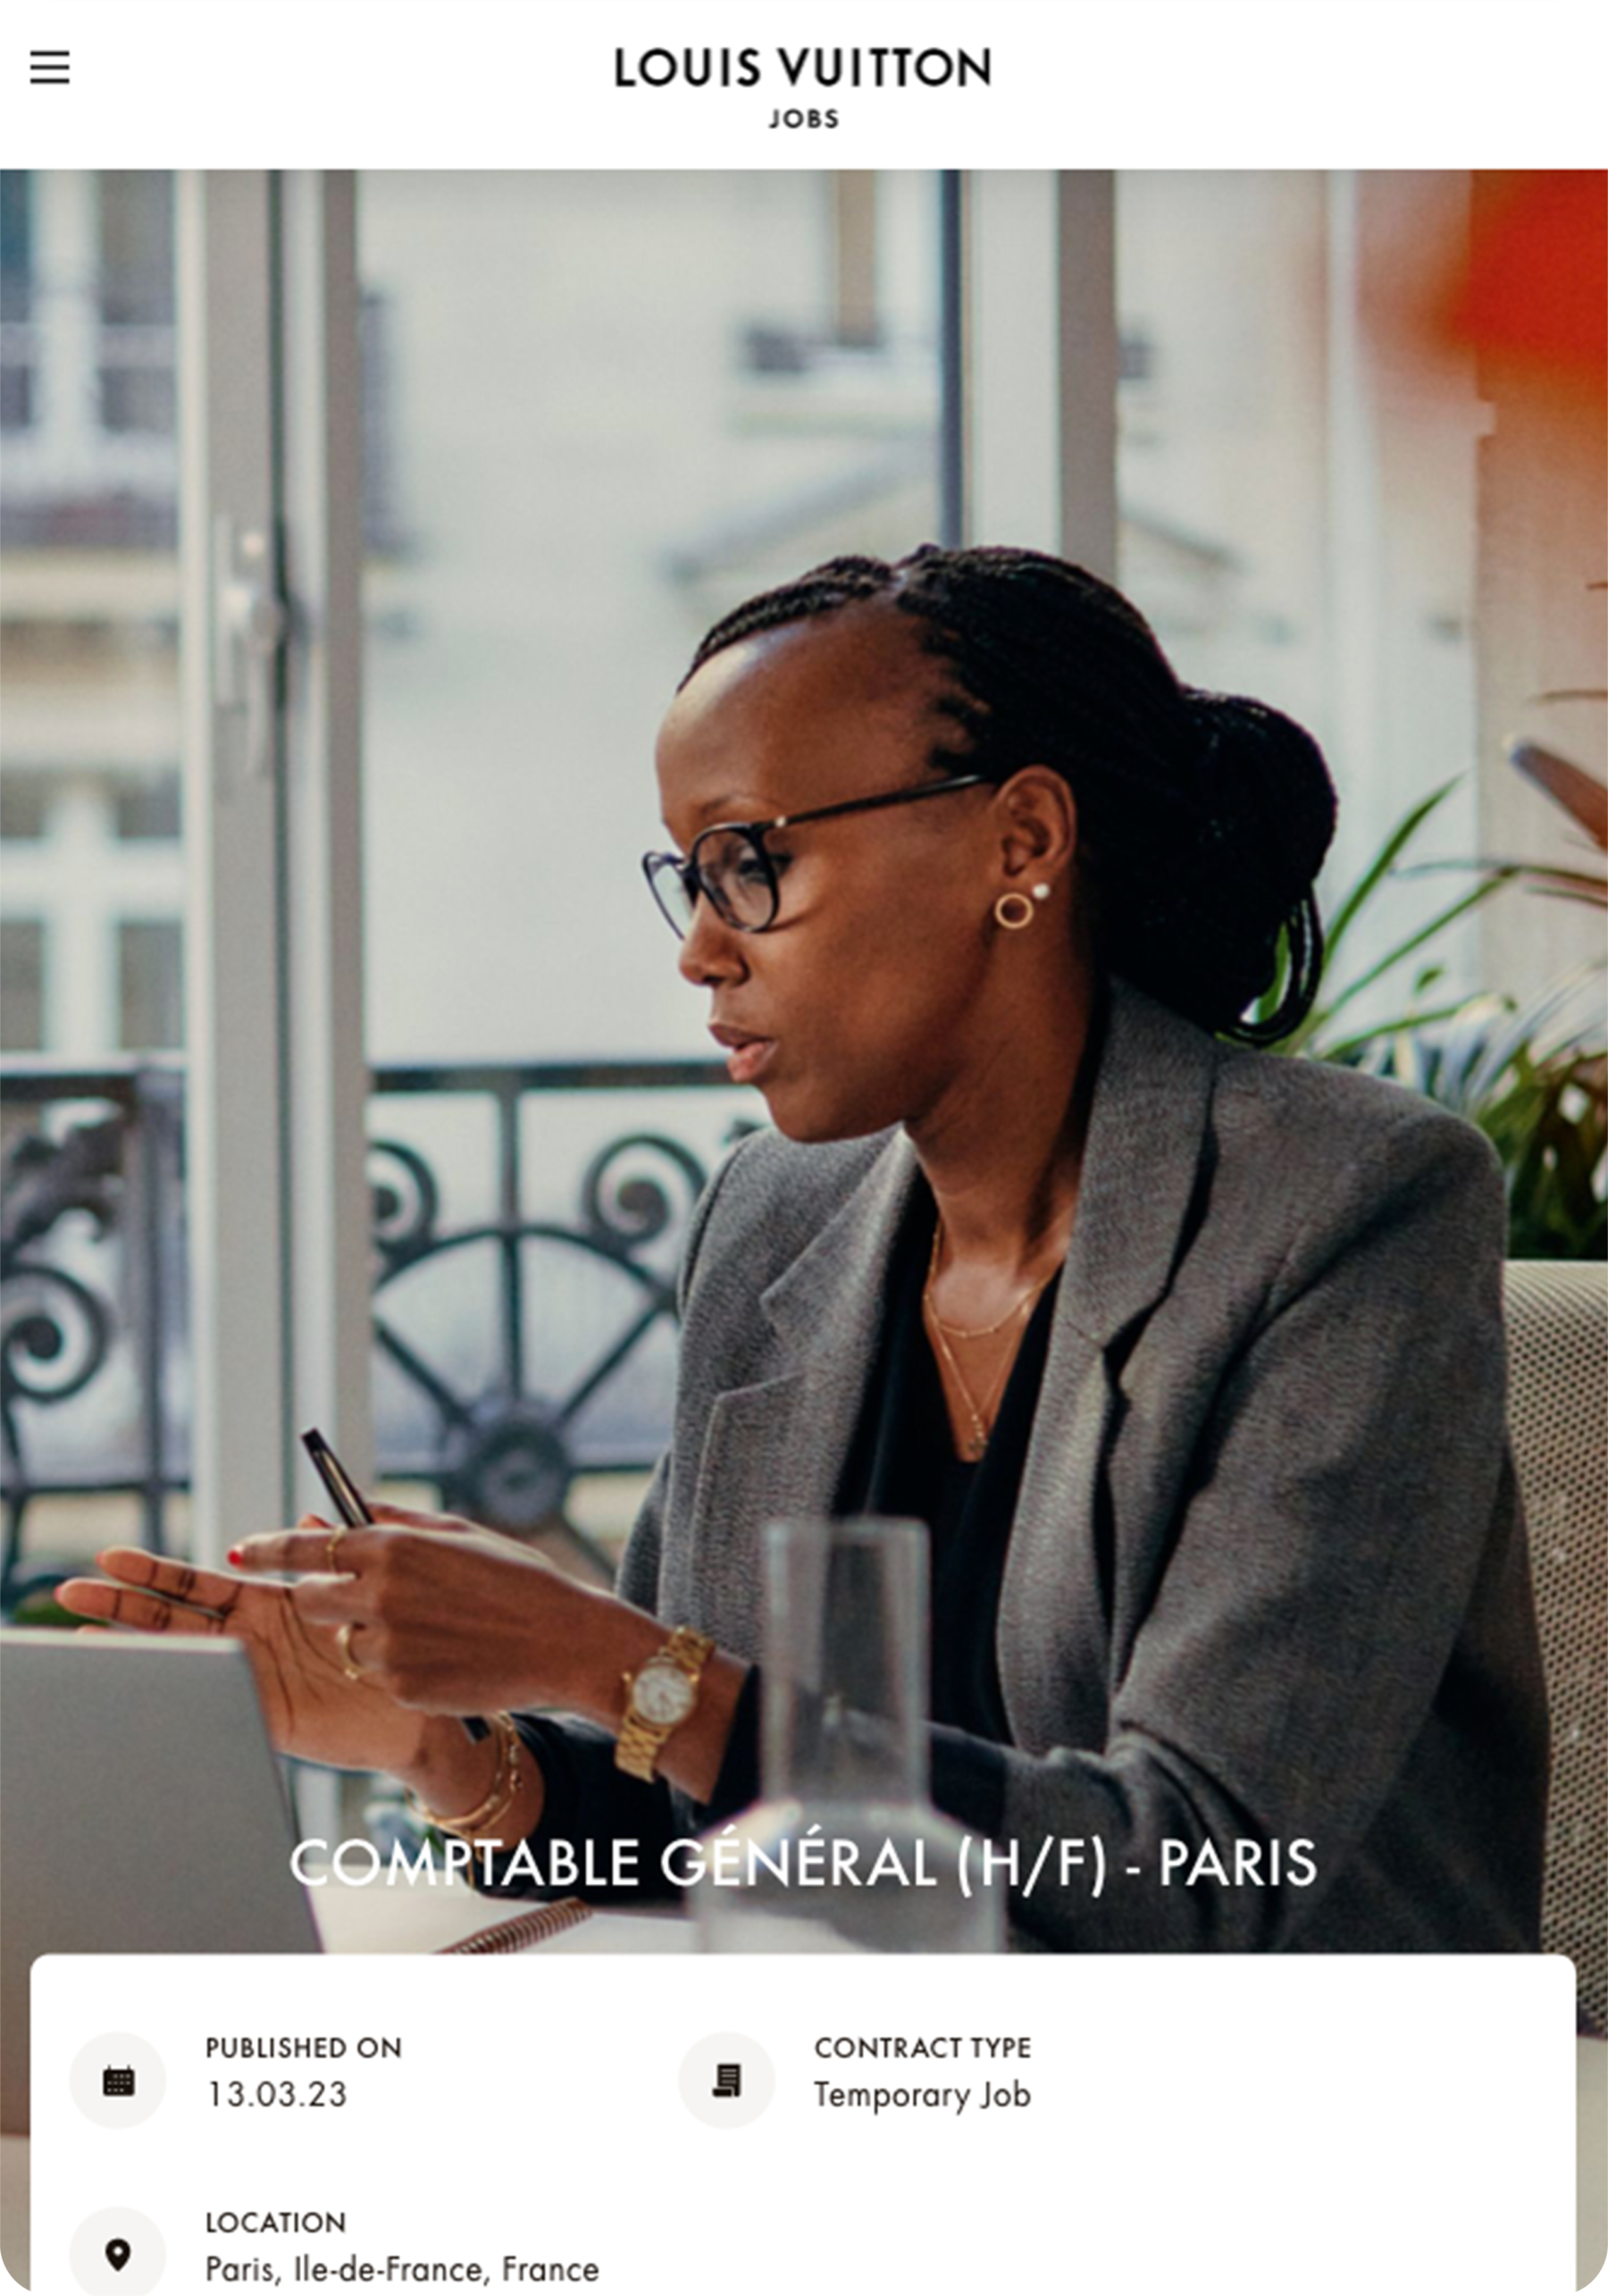 Louis Vuitton: The new Black office culture